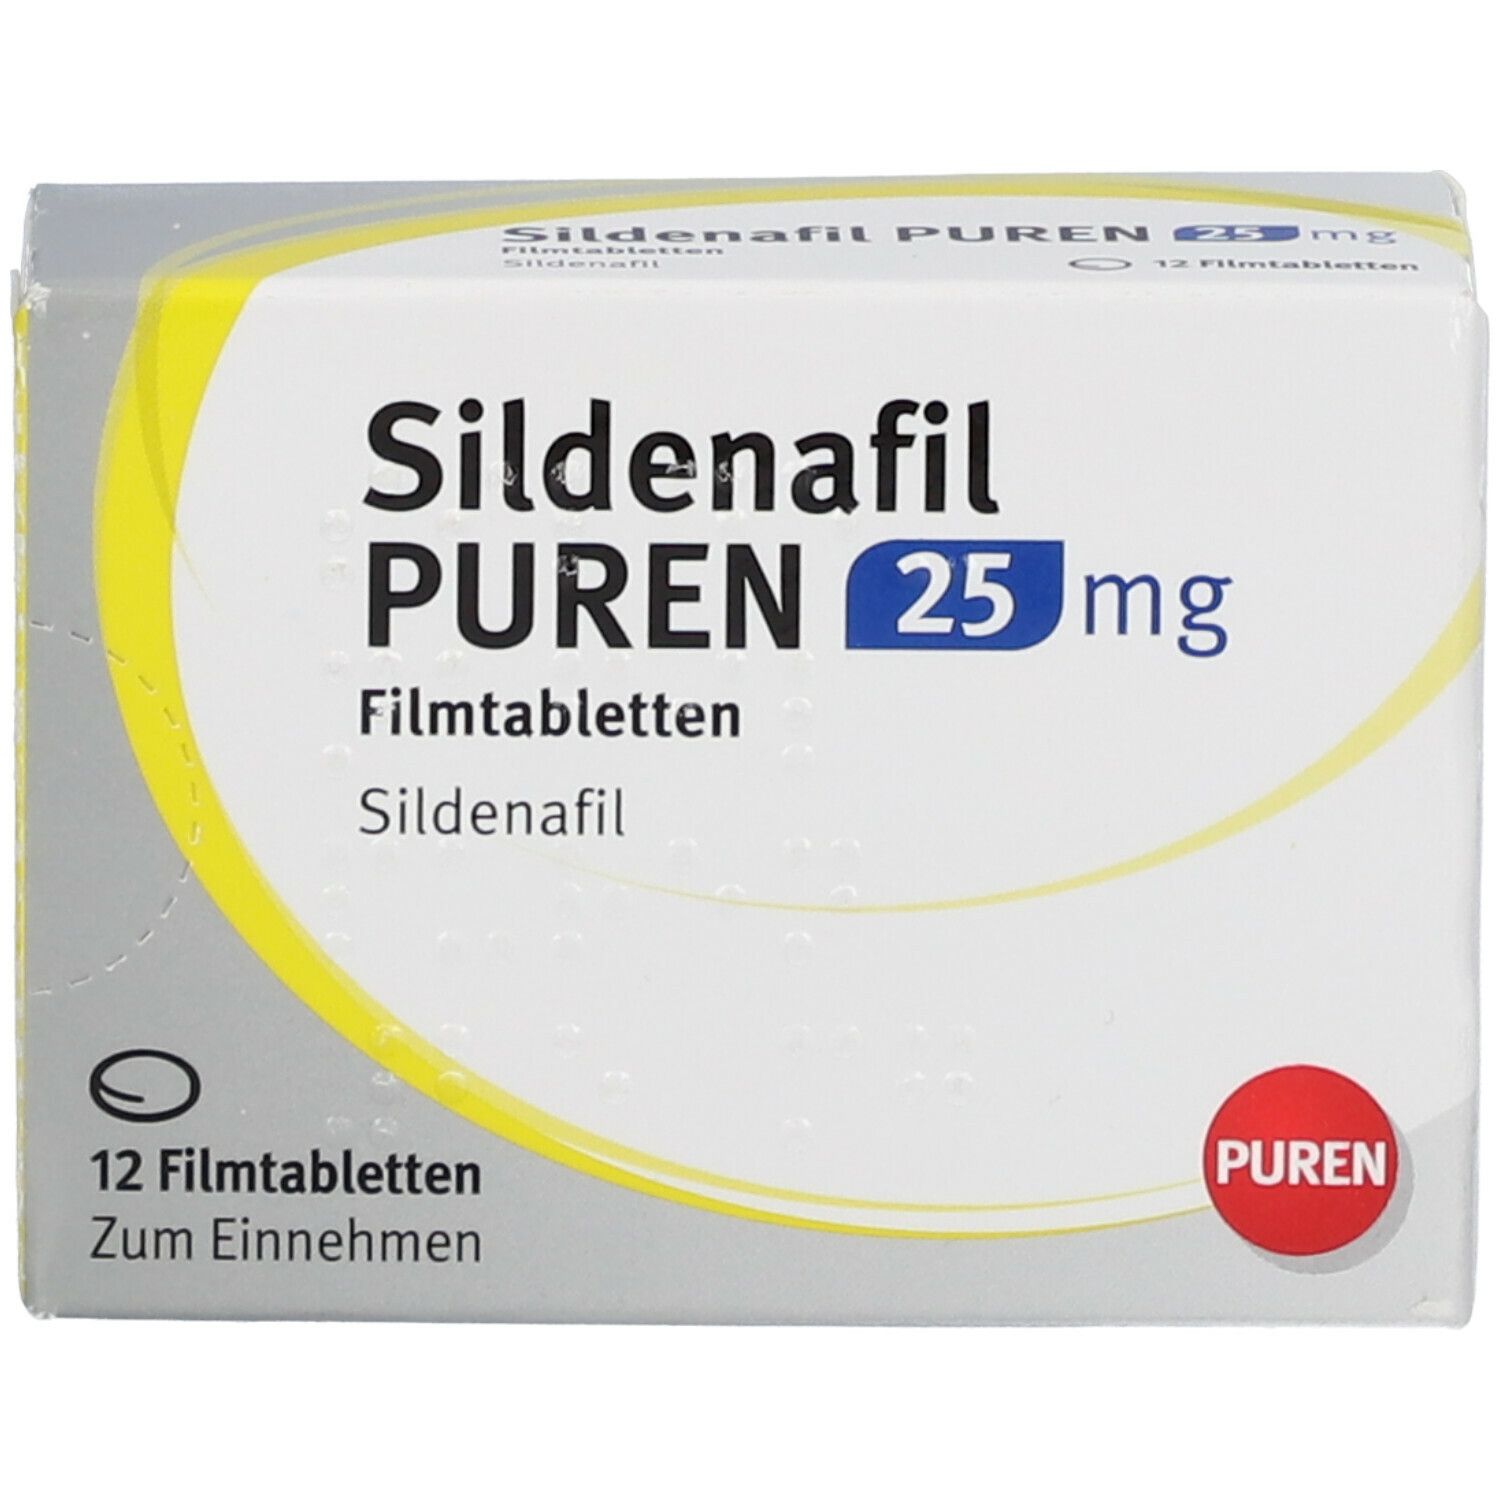 Sildenafil PUREN 25 mg